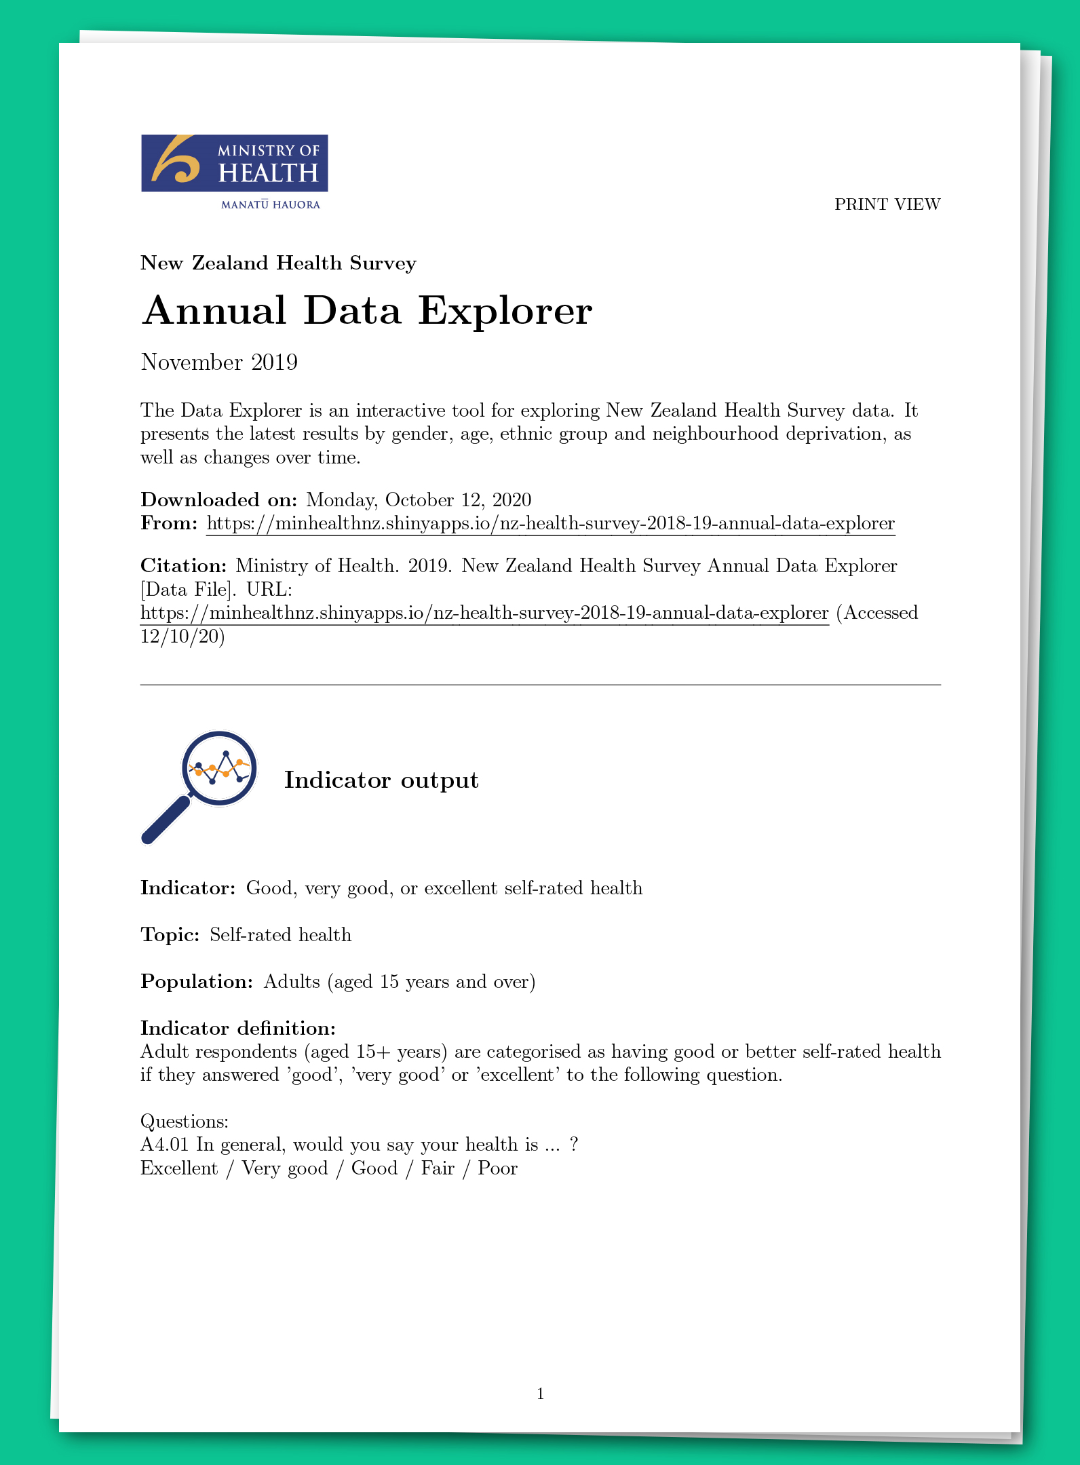 MoH DataExplorer PDF project image